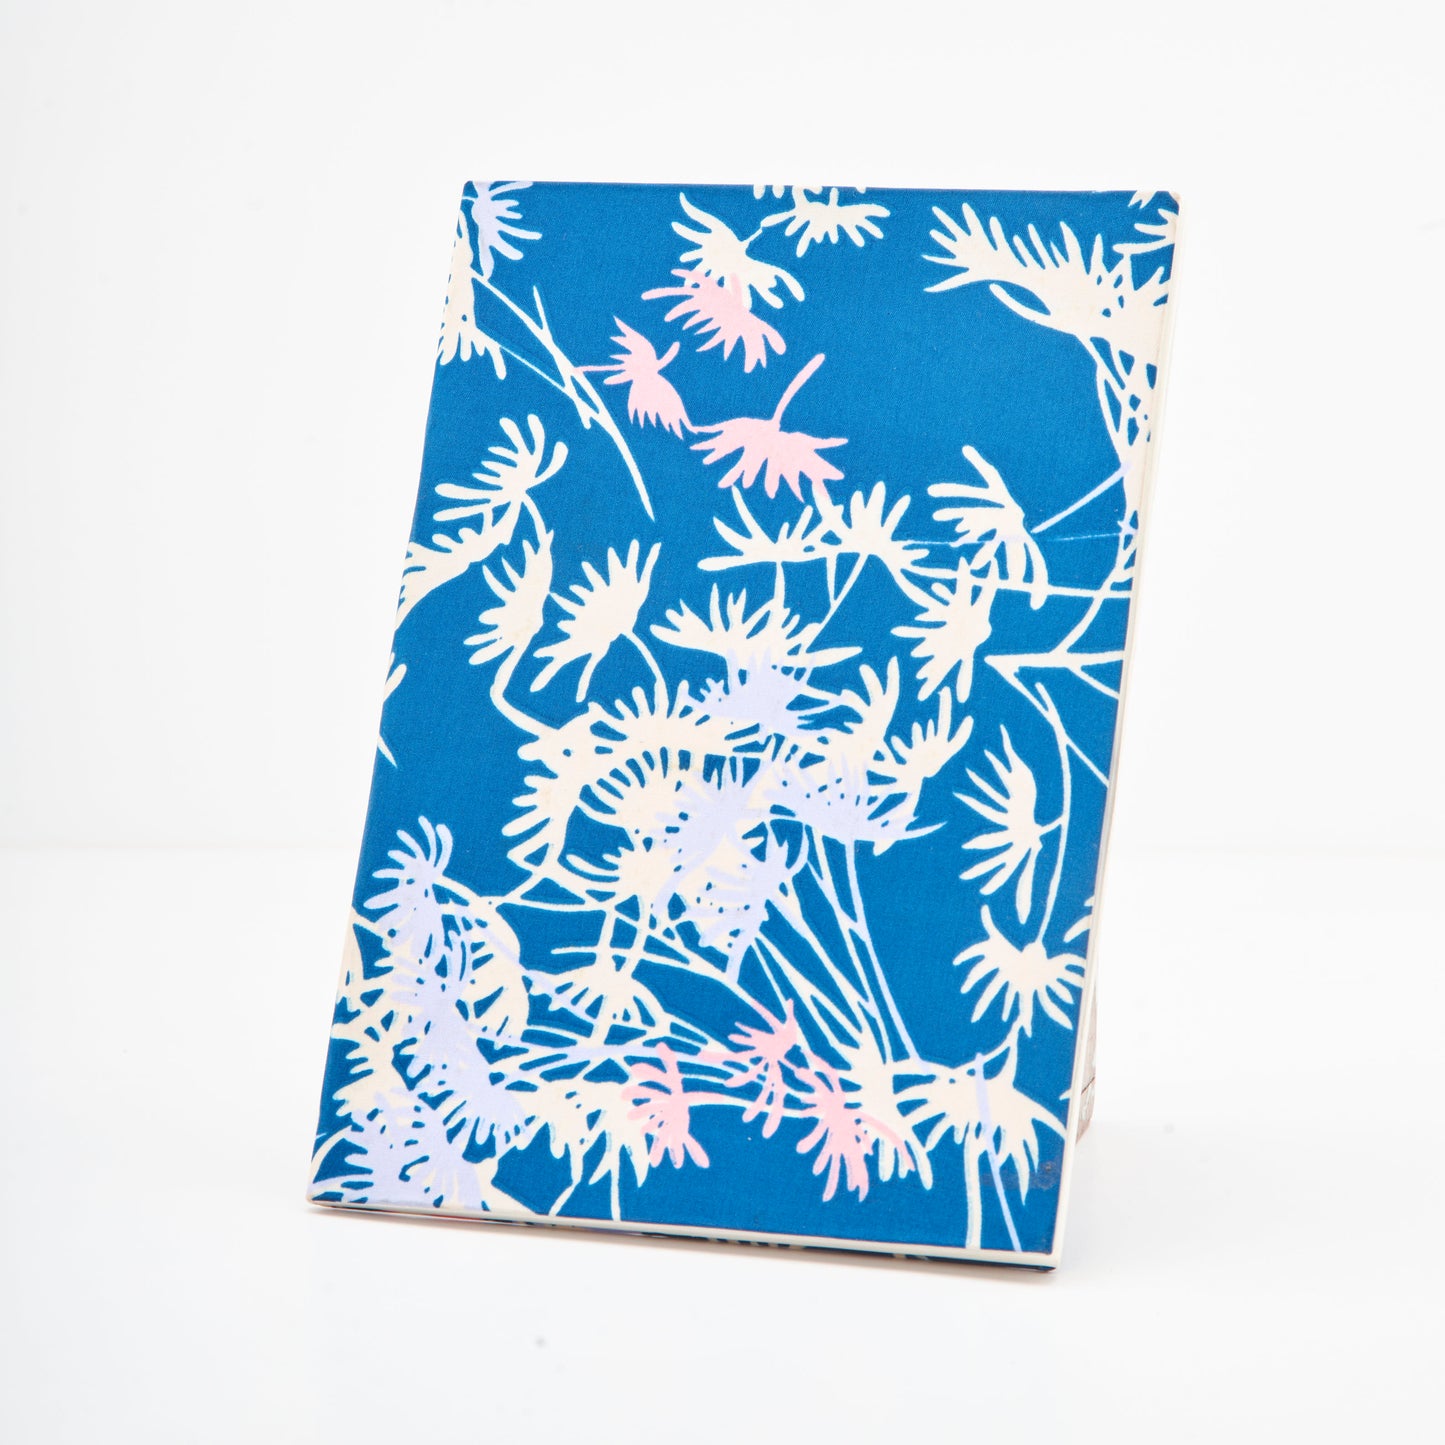 Beautiful Design on a Lapis Blue - Cloth Diary - Medium Size